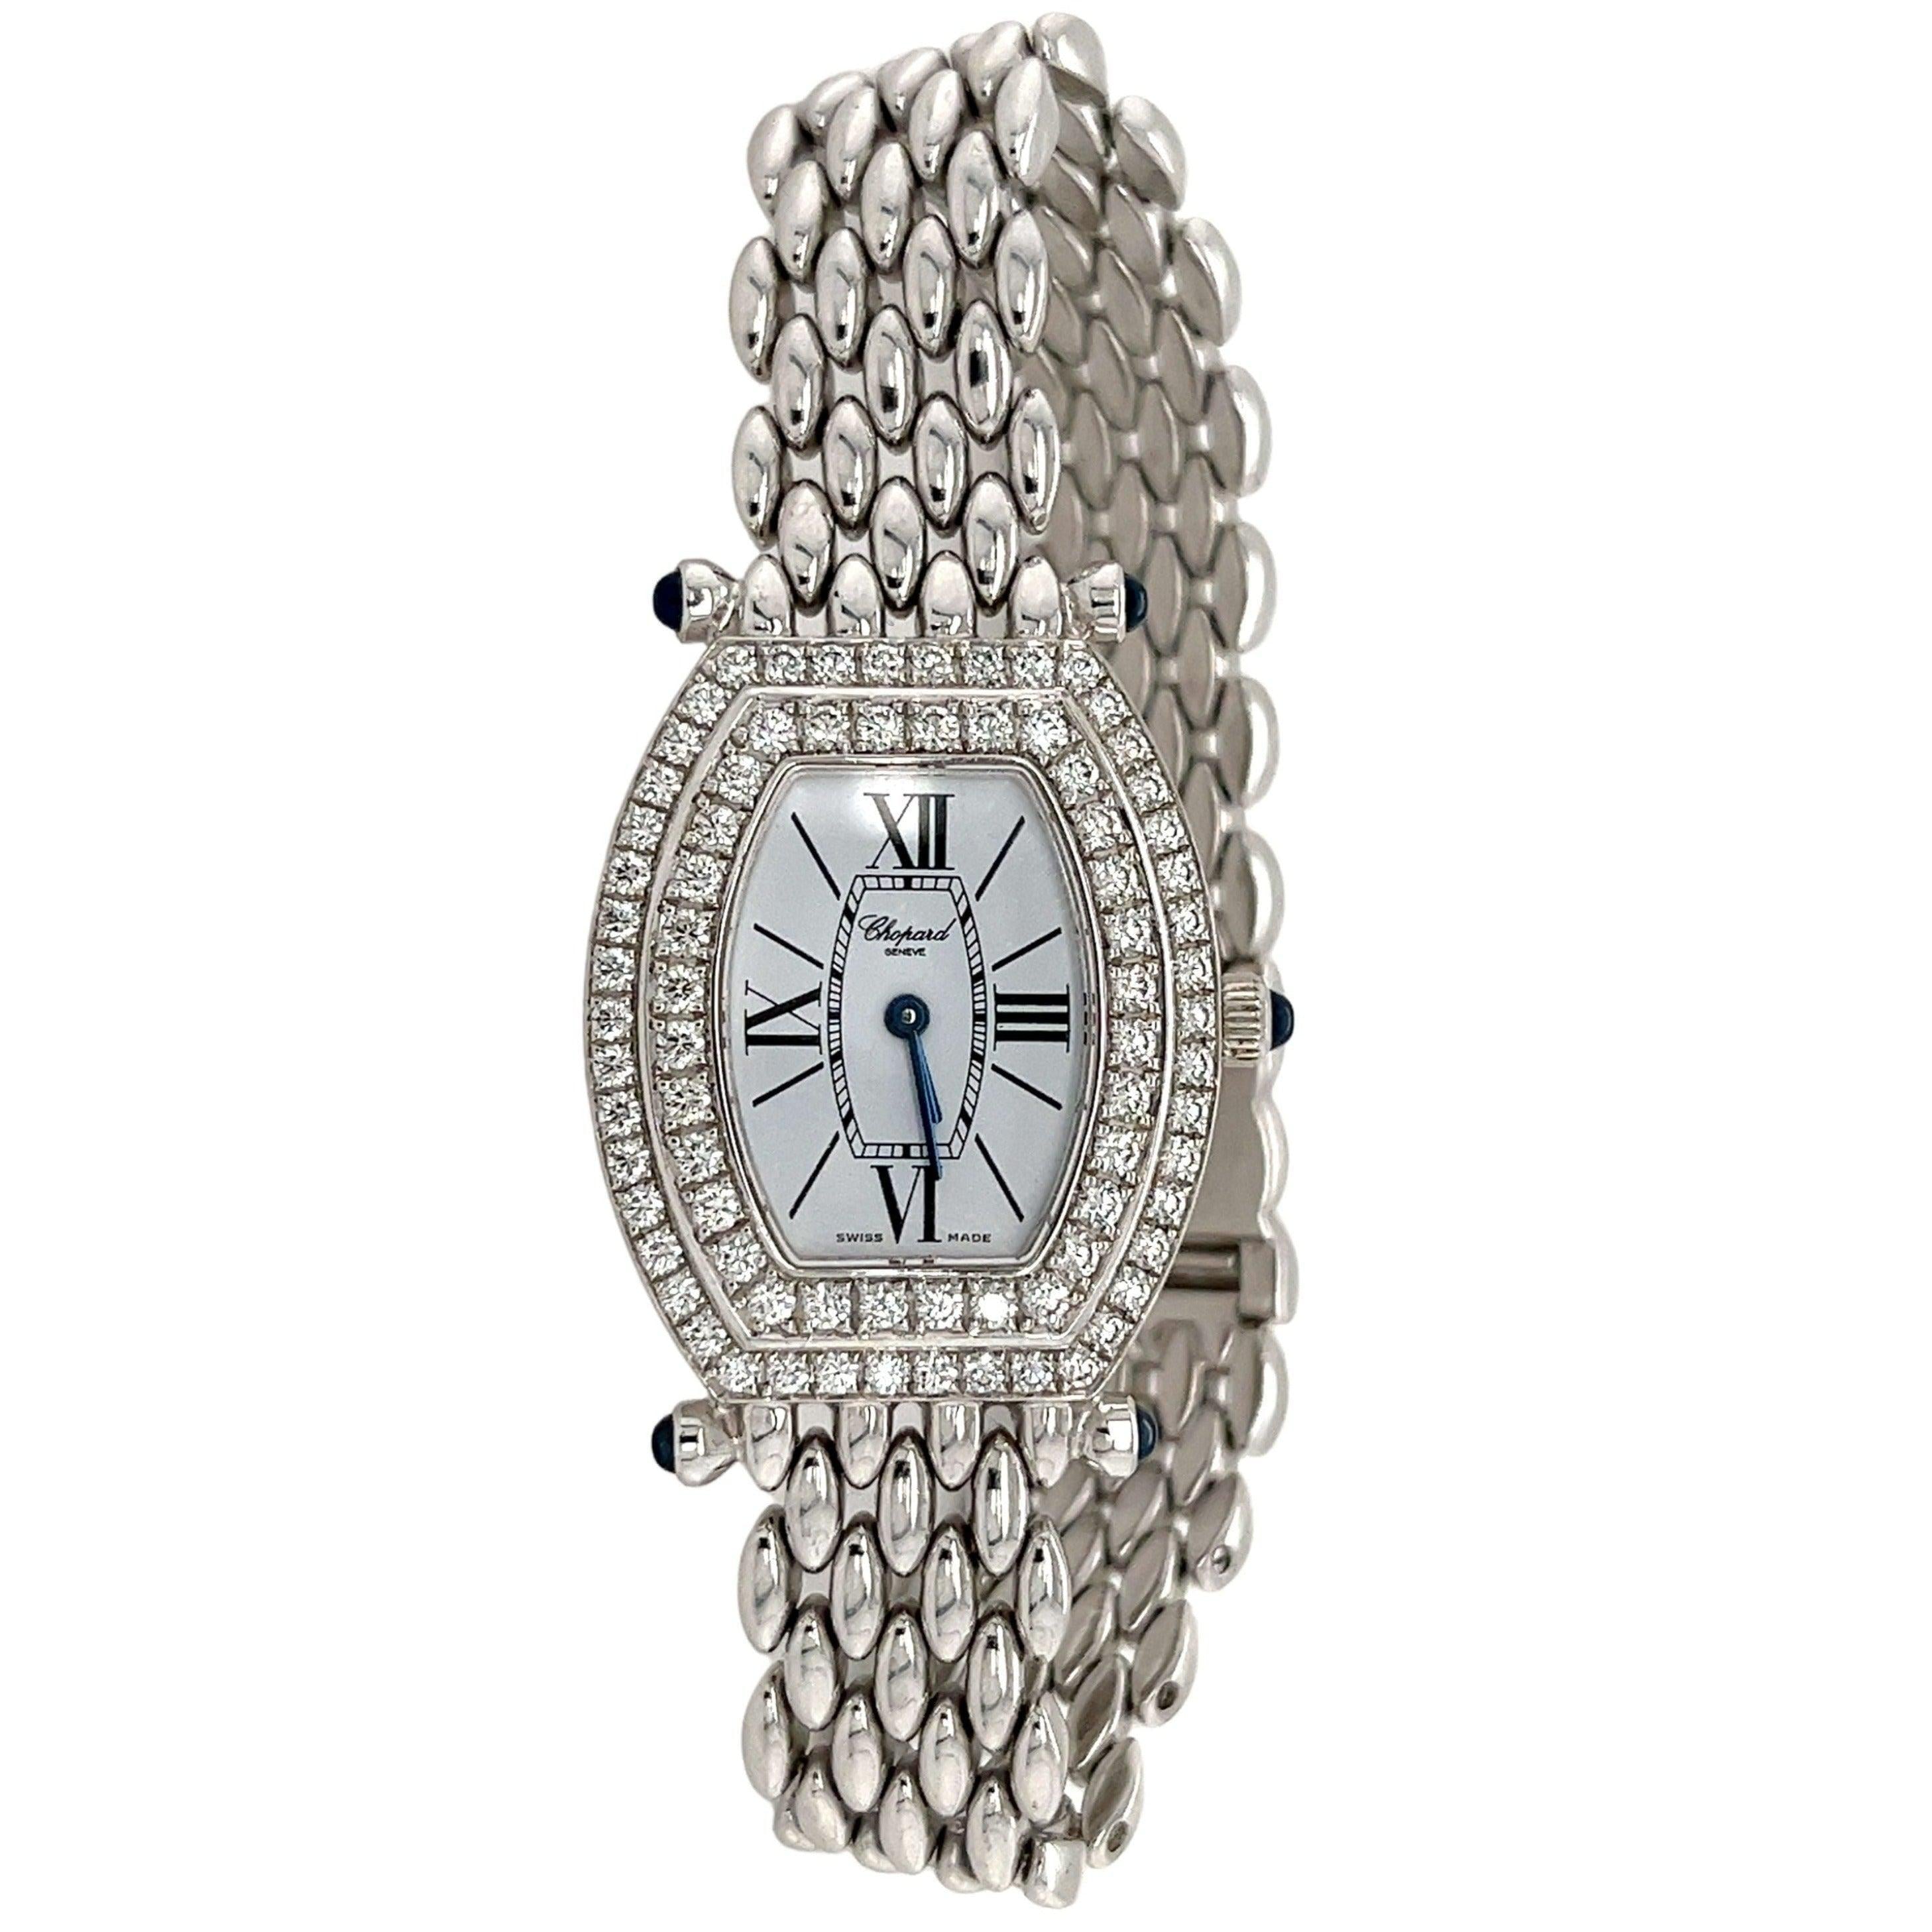 6560-23 Diamond Bezel Watch in 18k White Gold-Watches-ASSAY